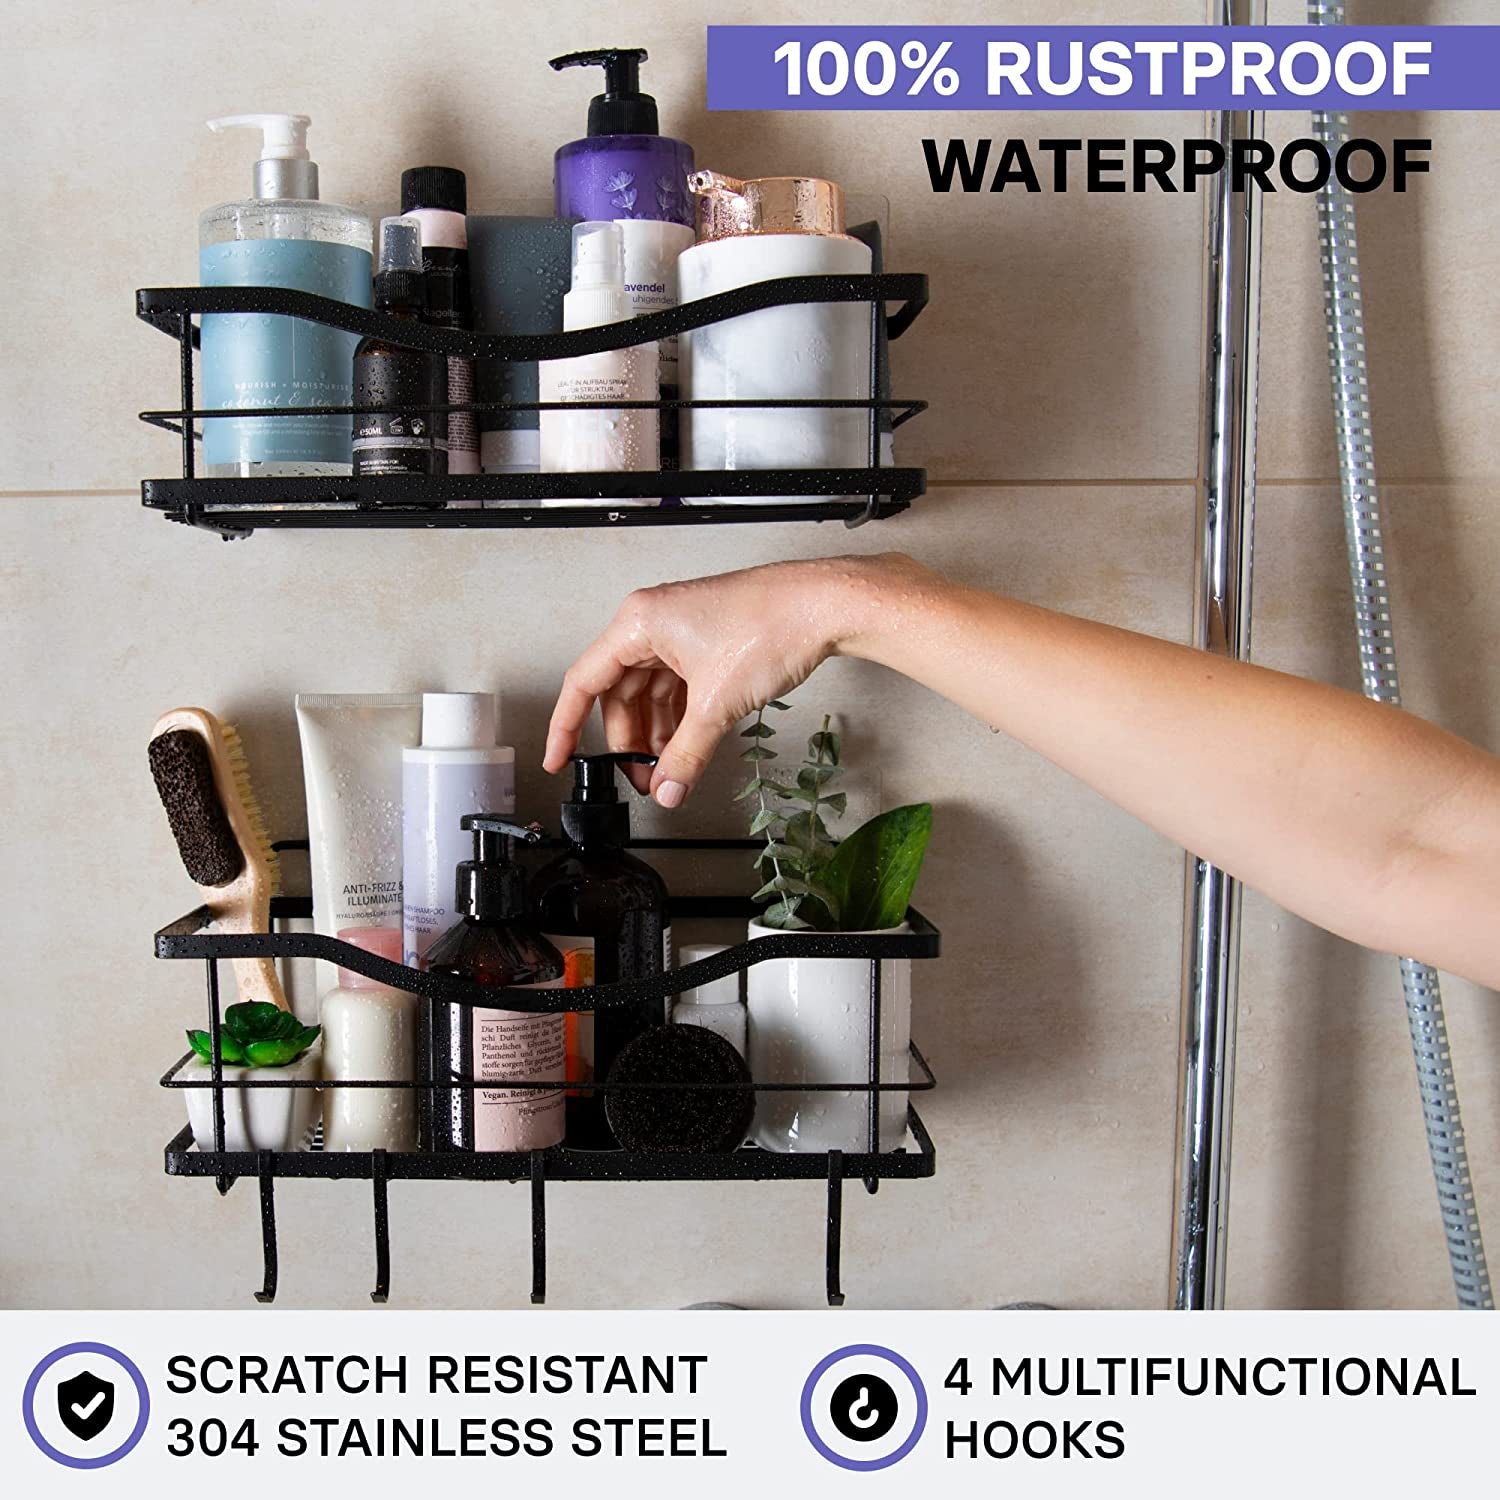 Traceless Adhesive Shower Caddy Bathroom Shelf - Rustproof SUS304 Food Storage Basket with 2-In-1 Kitchen Spice Racks, 2 Pack (Matte Black)